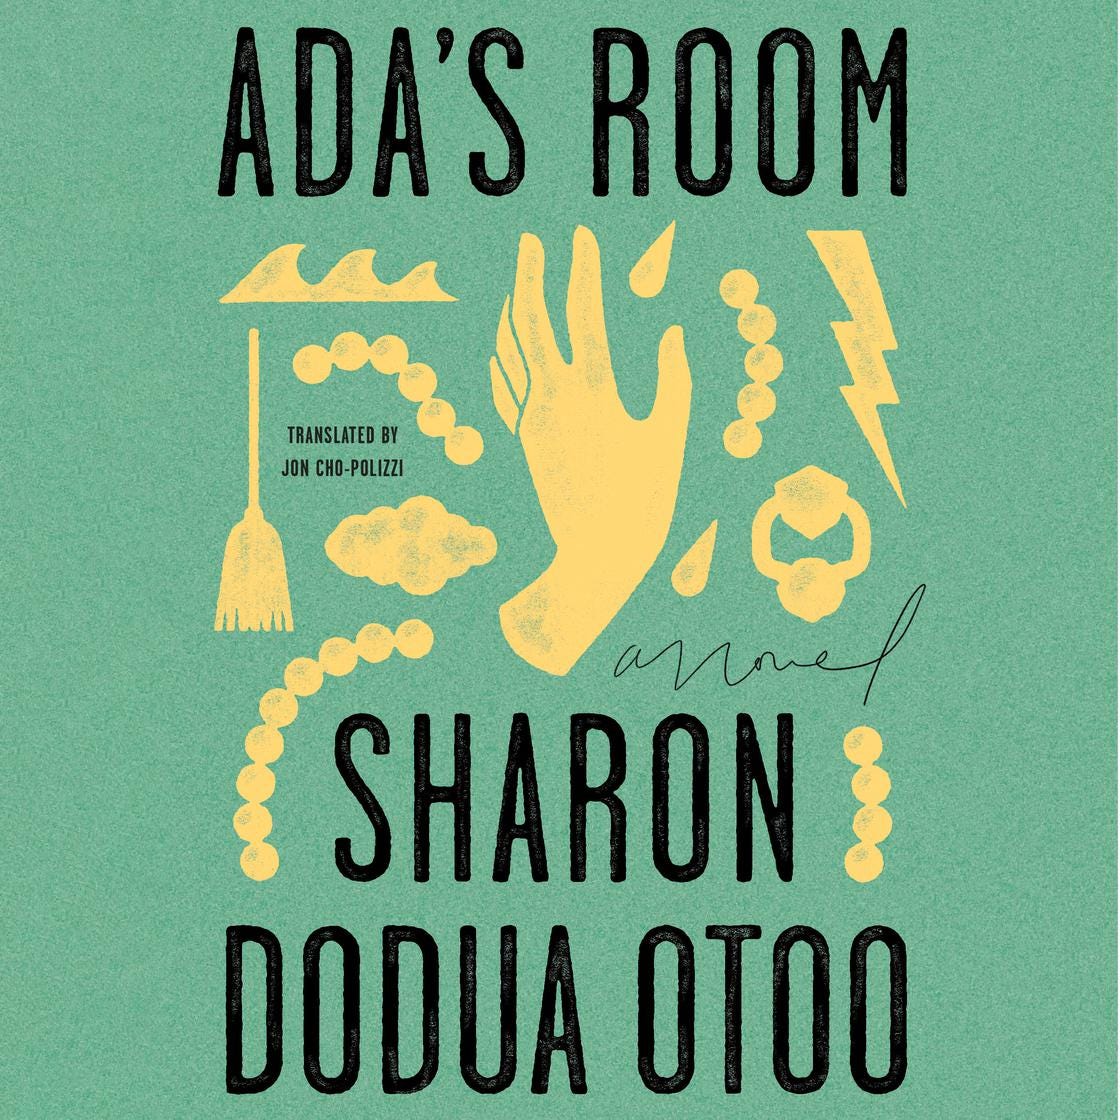 Audiobook cover of Ada’s Room